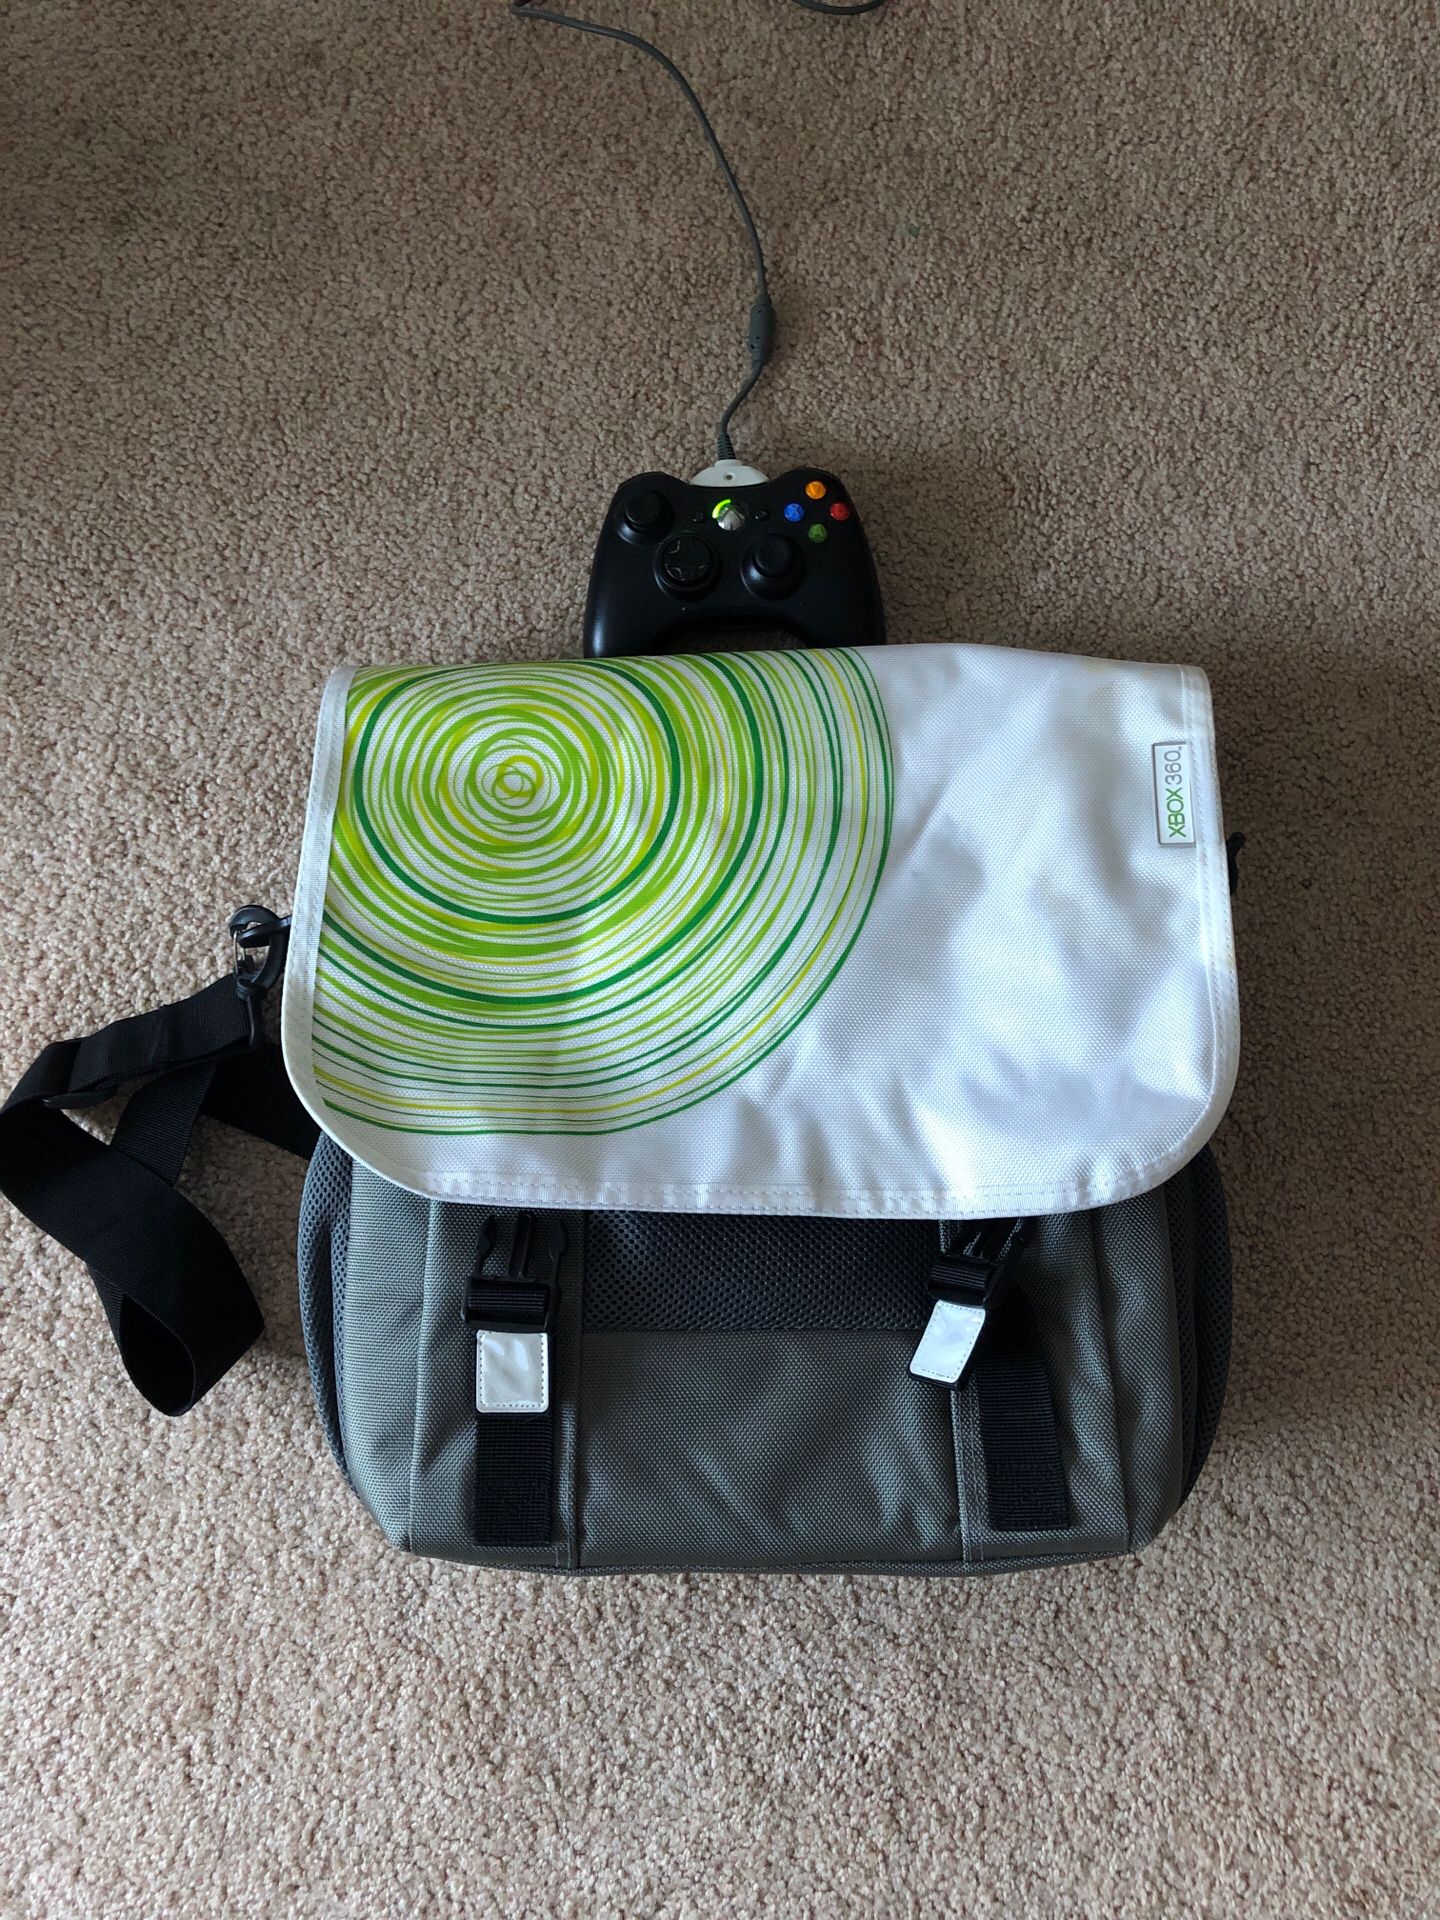 Xbox 360 briefcase